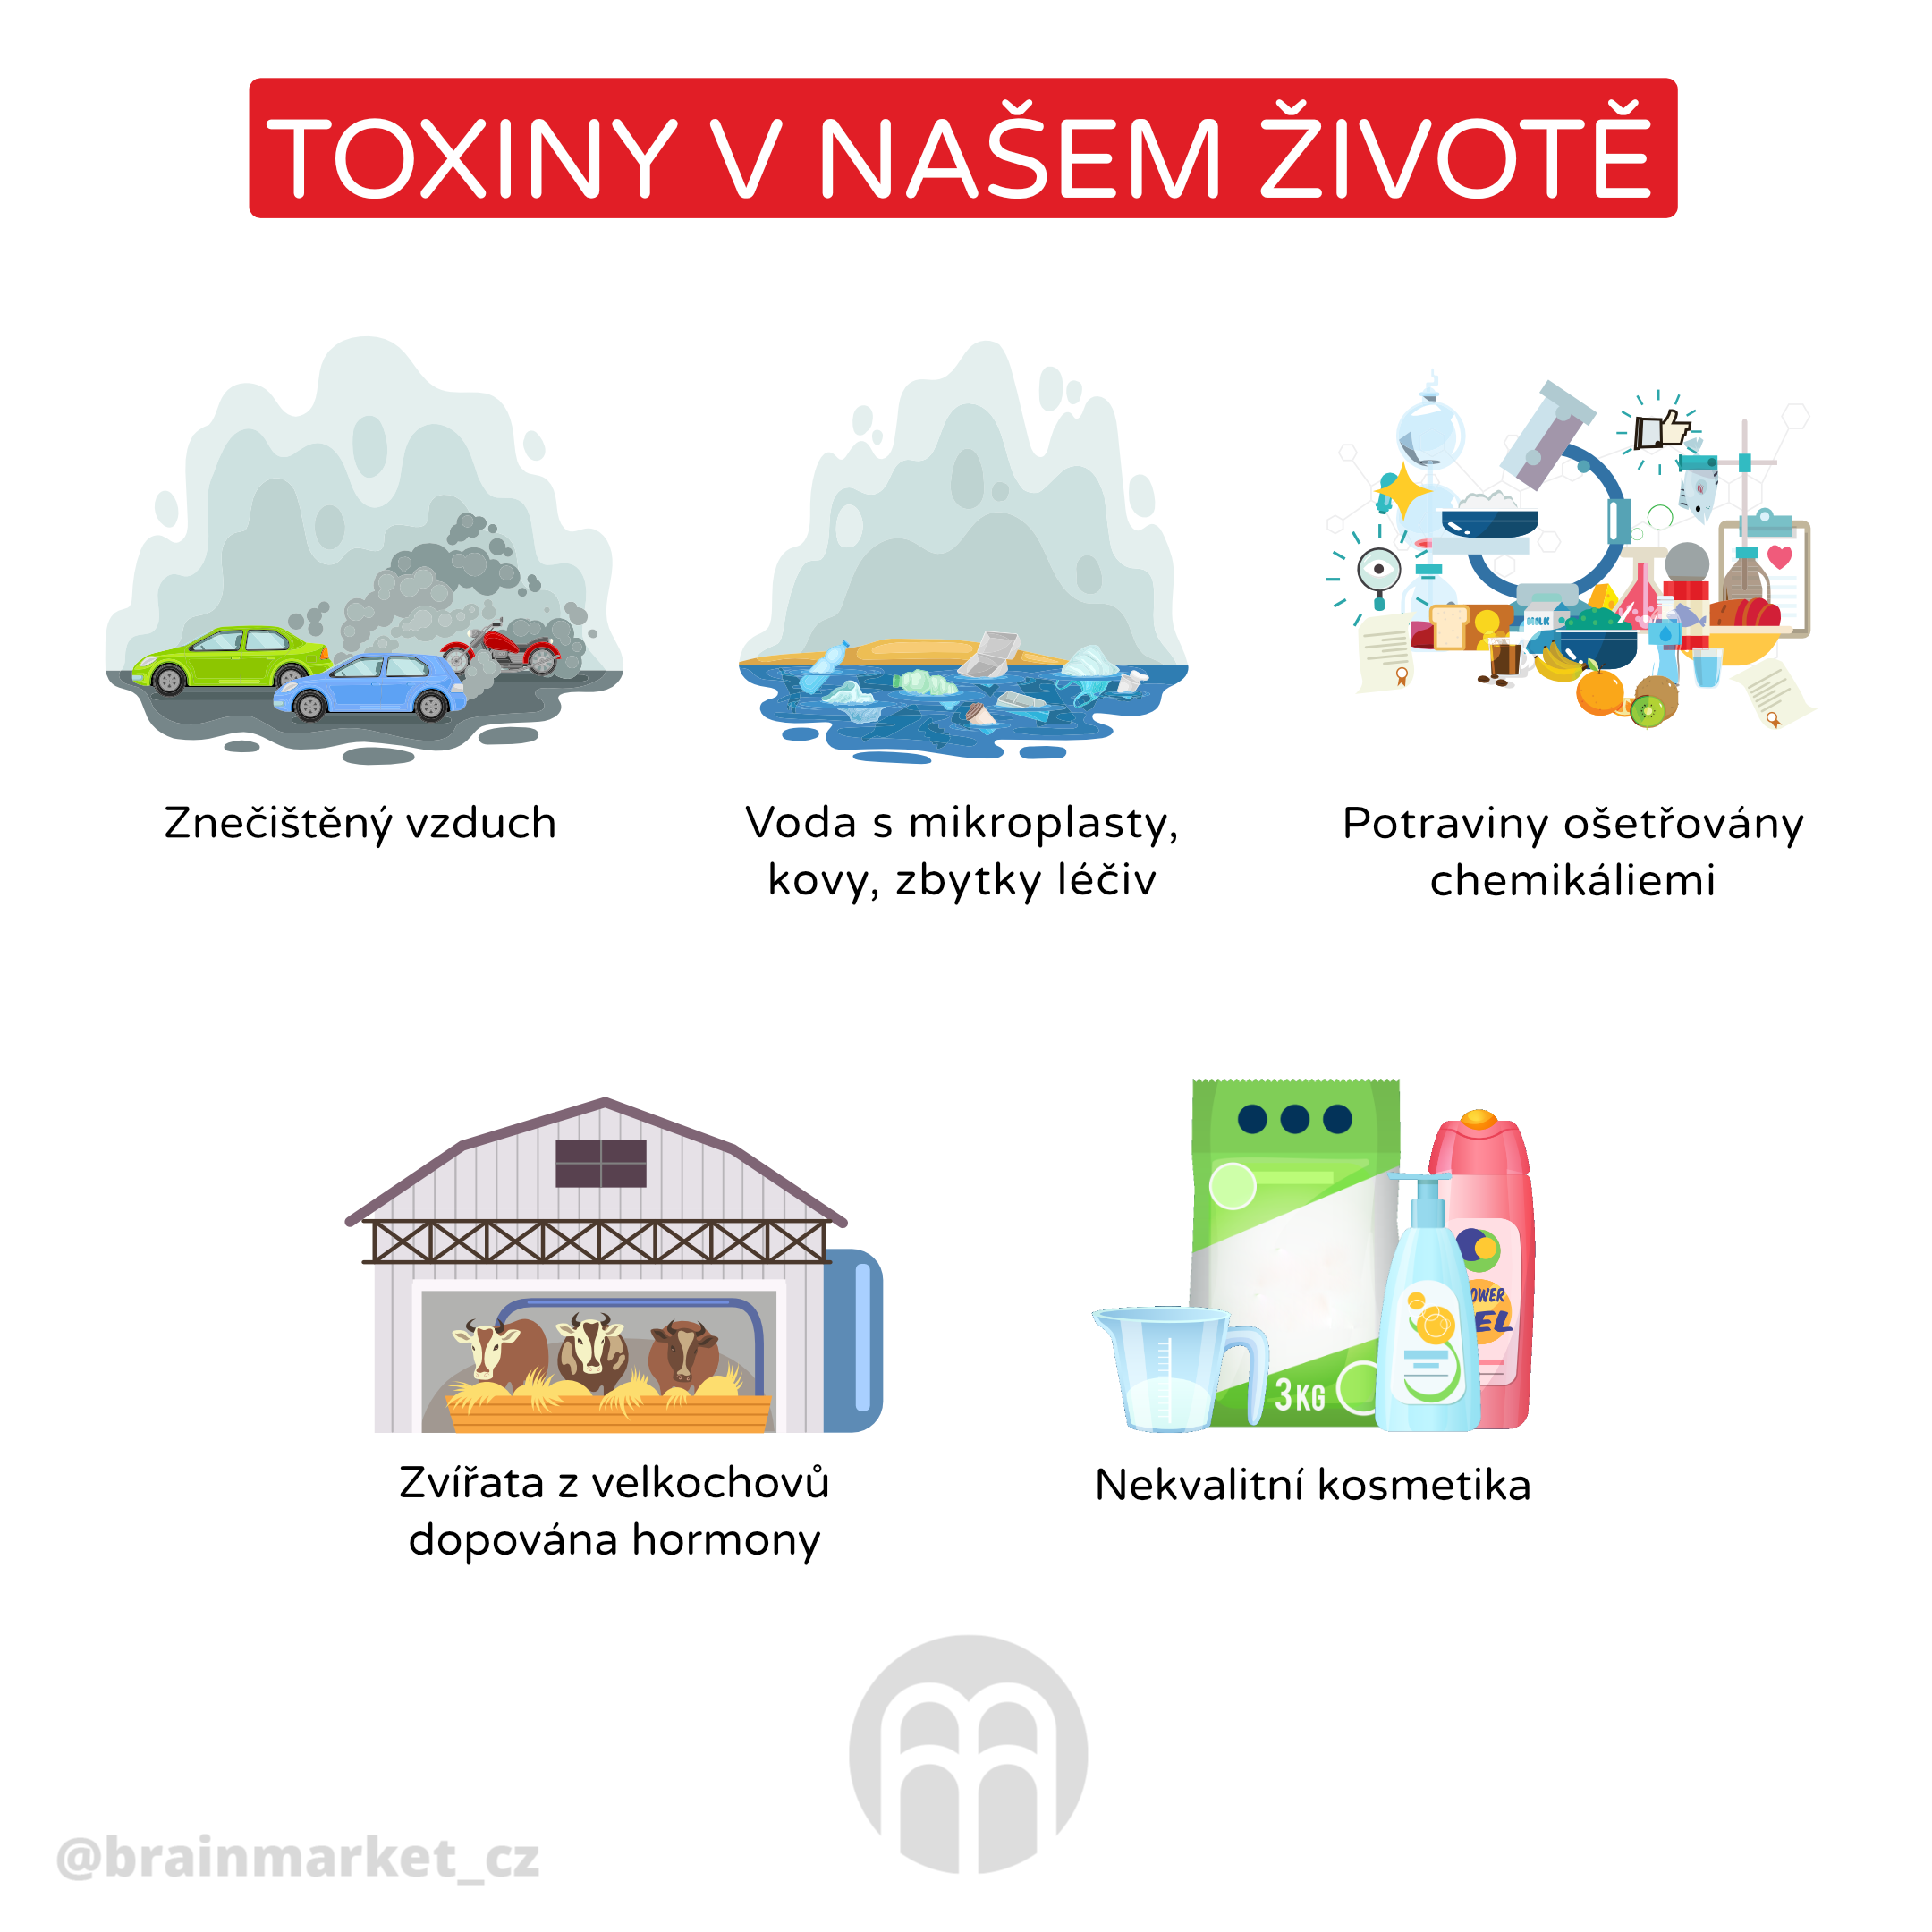 toxini v nasem zivote_infografika_cz